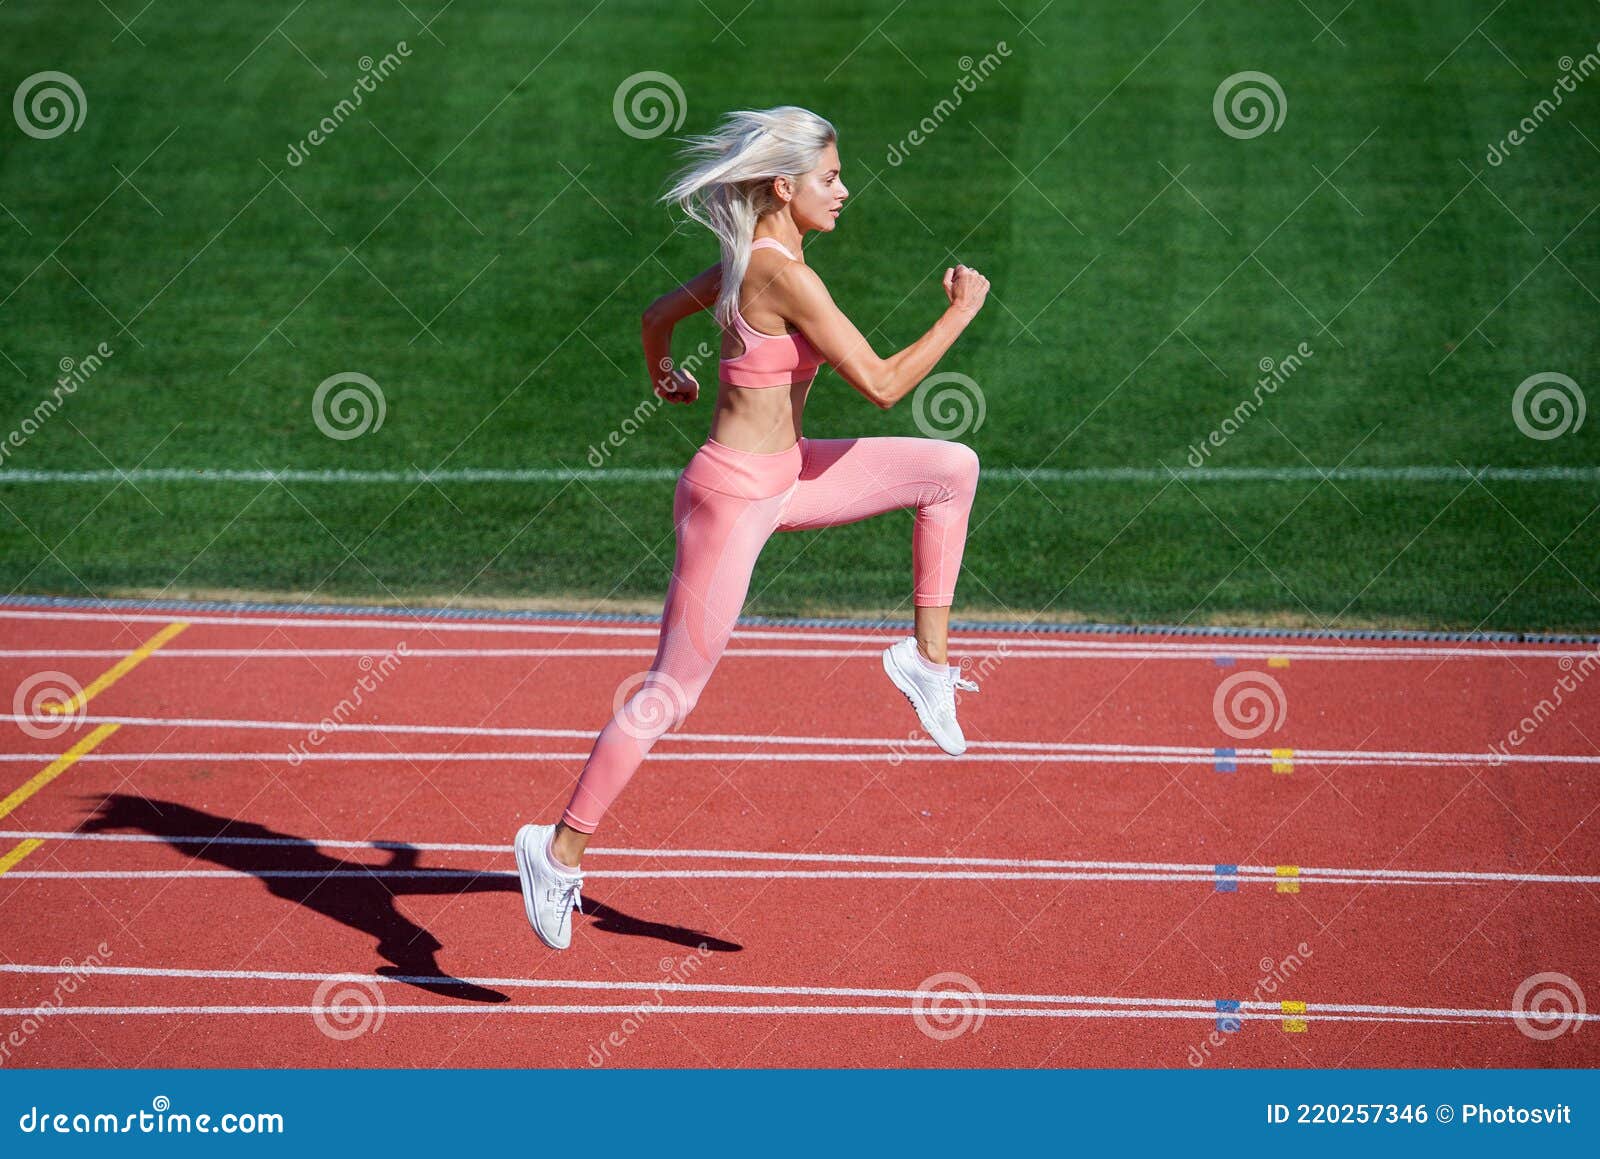 https://thumbs.dreamstime.com/z/mujer-deportiva-en-ropa-sprinting-estadio-pista-antes-de-entrenar-energ%C3%ADa-fitness-220257346.jpg